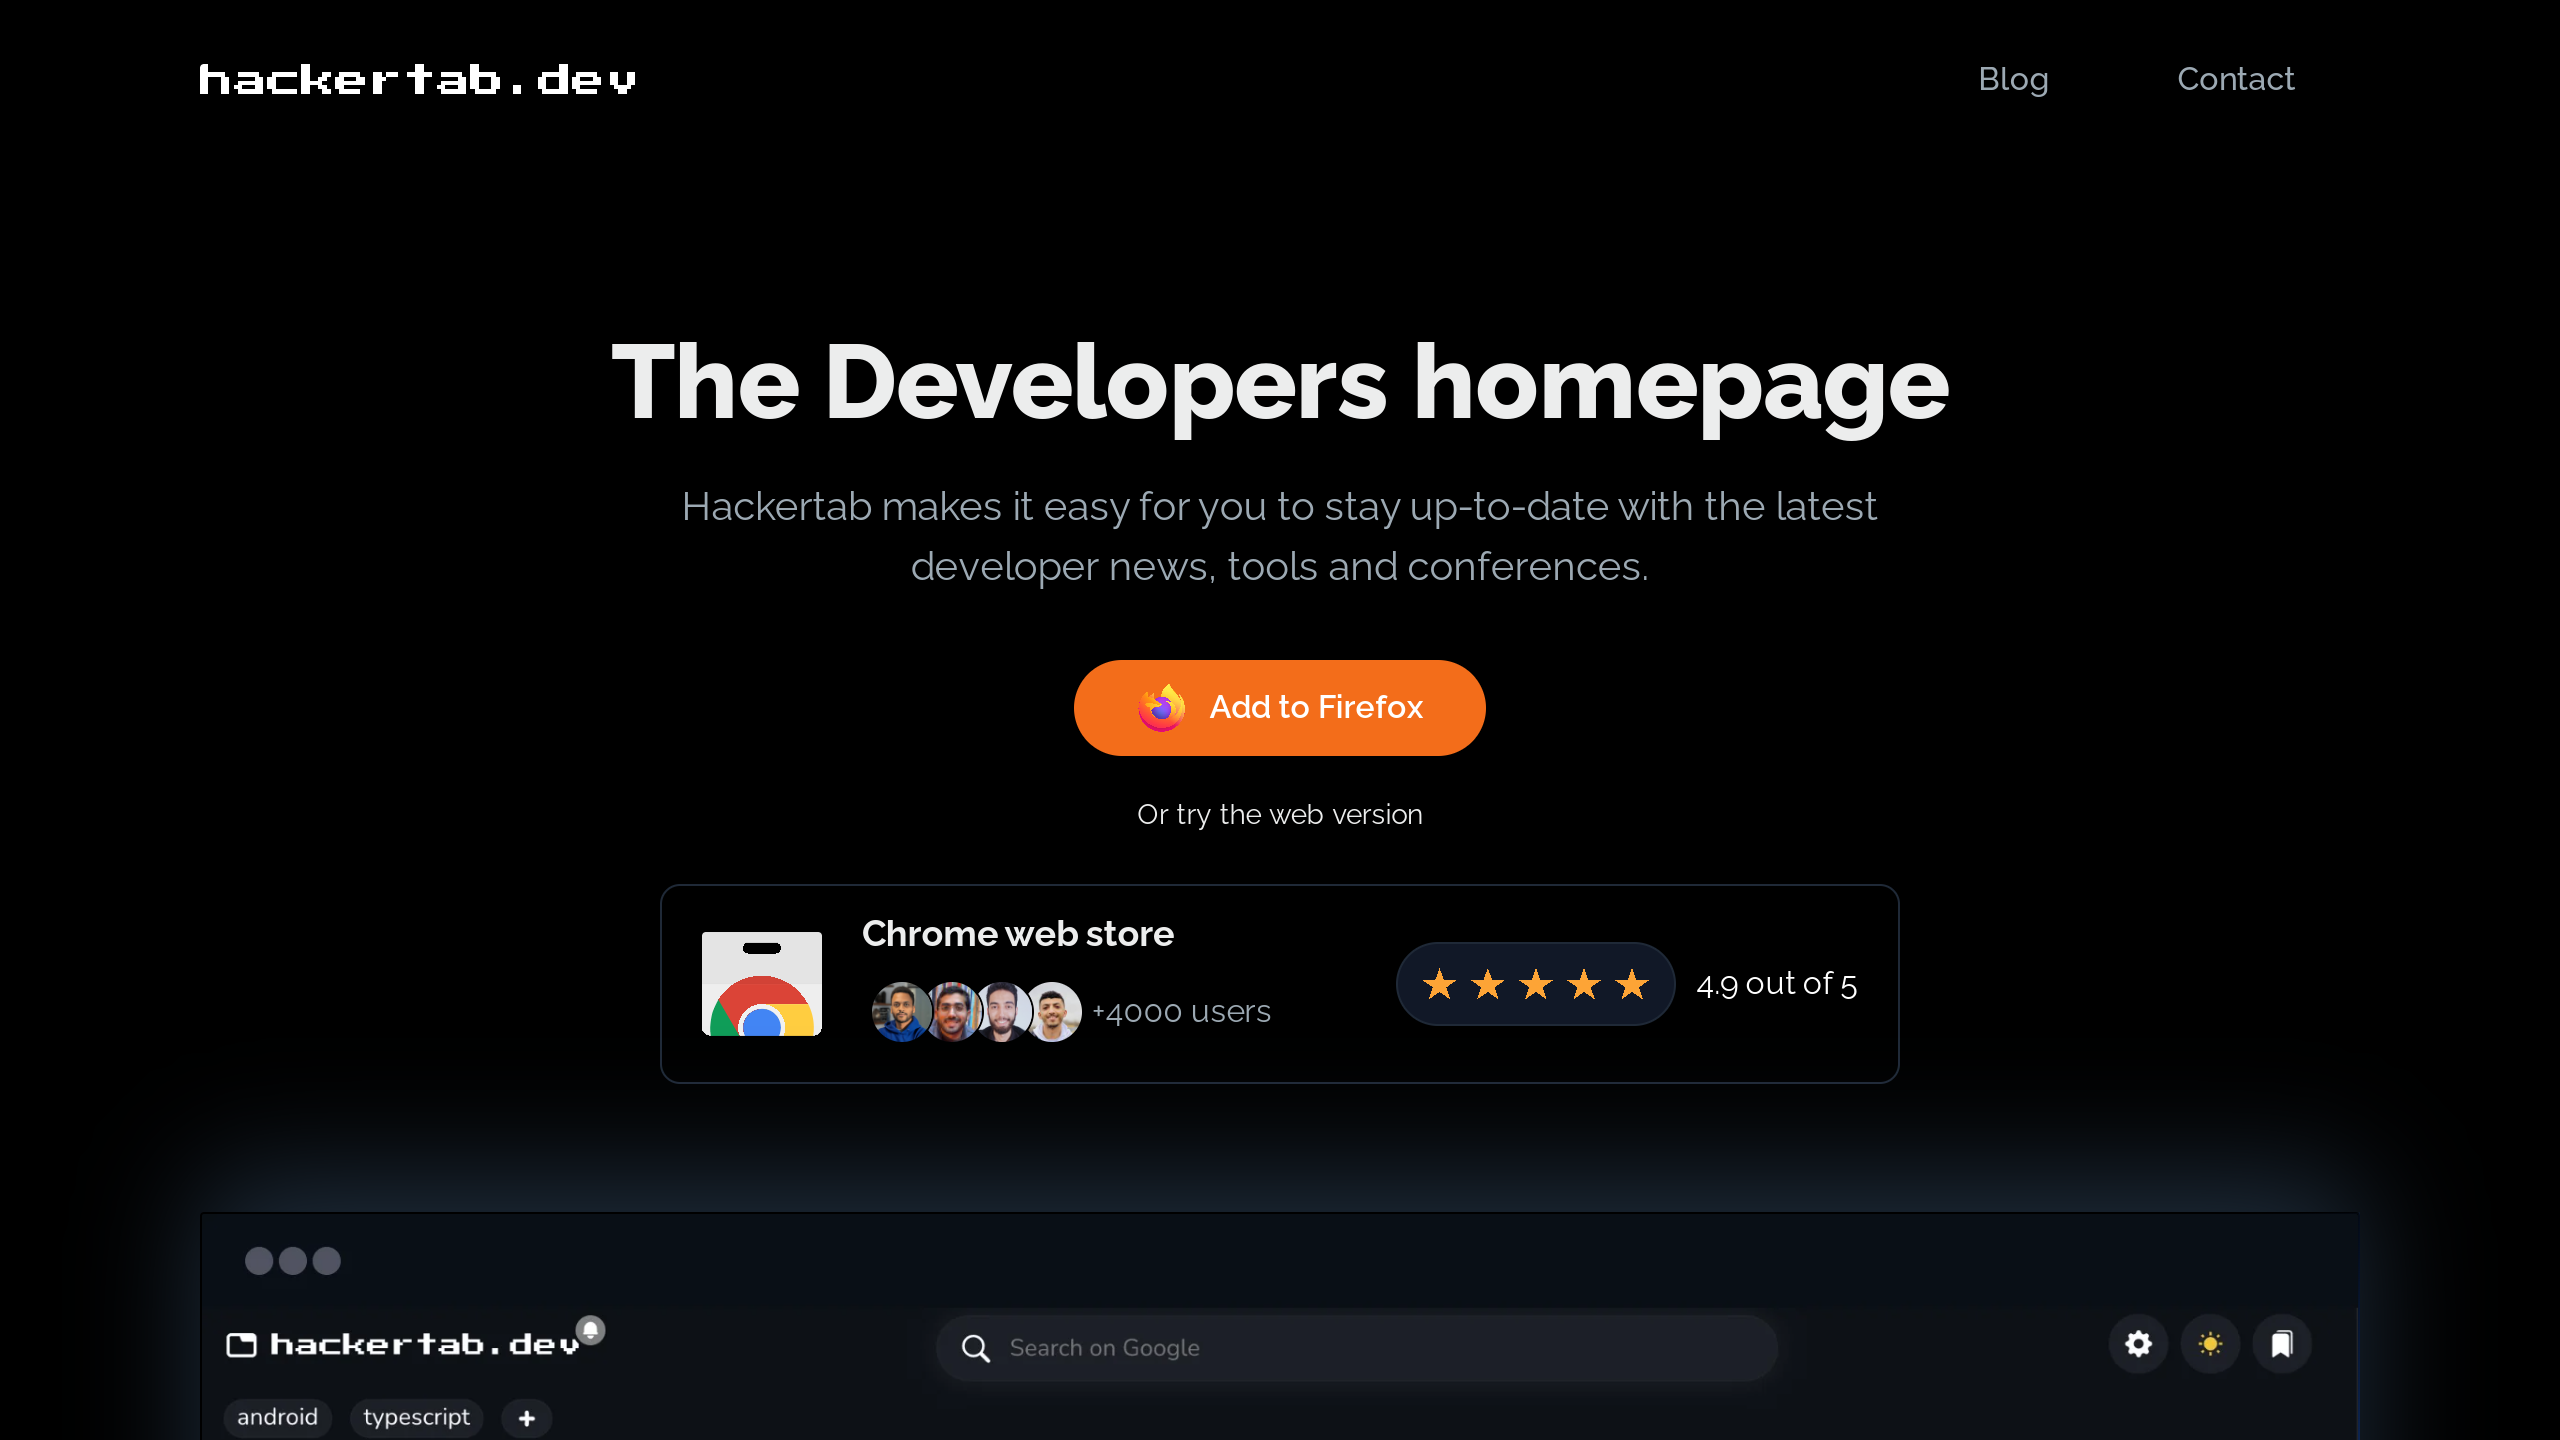 Hackertab.dev's website screenshot